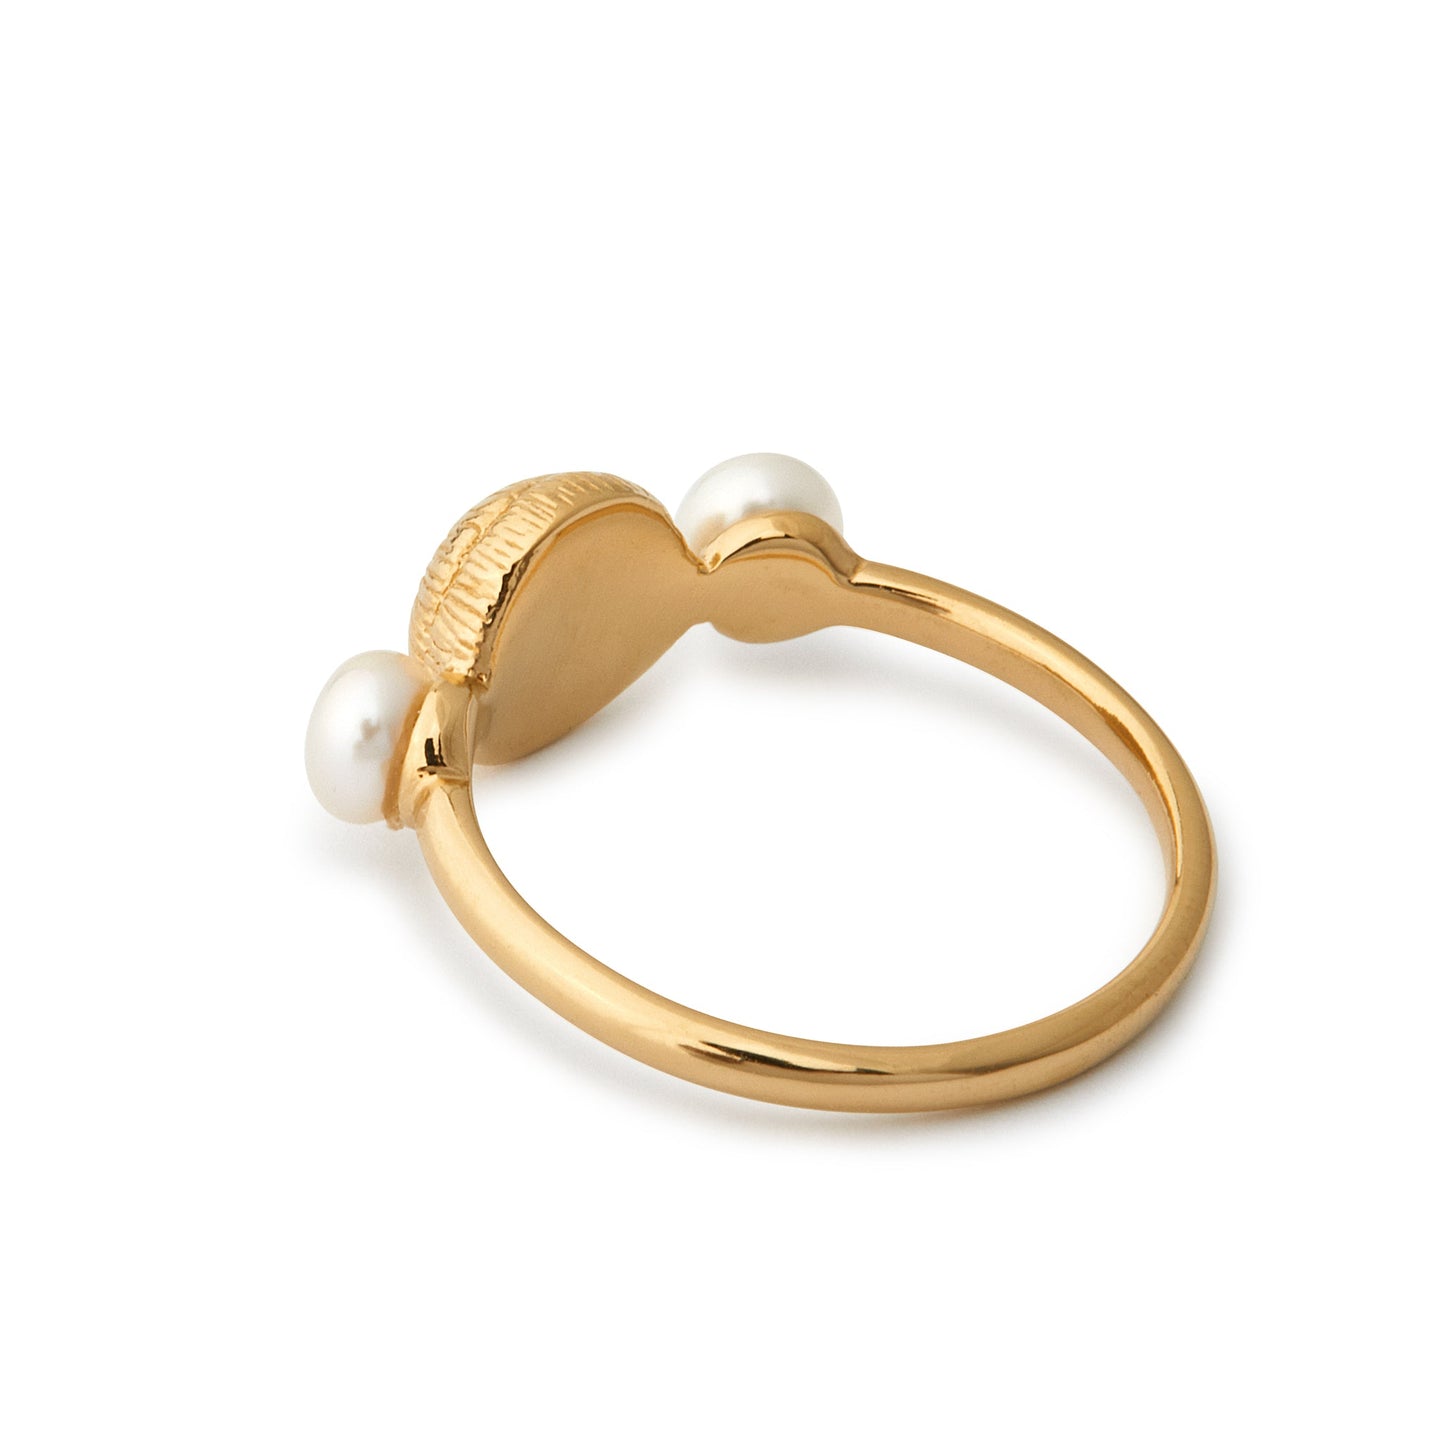 Sprial & Pearls Ring - 14 Karat Gold